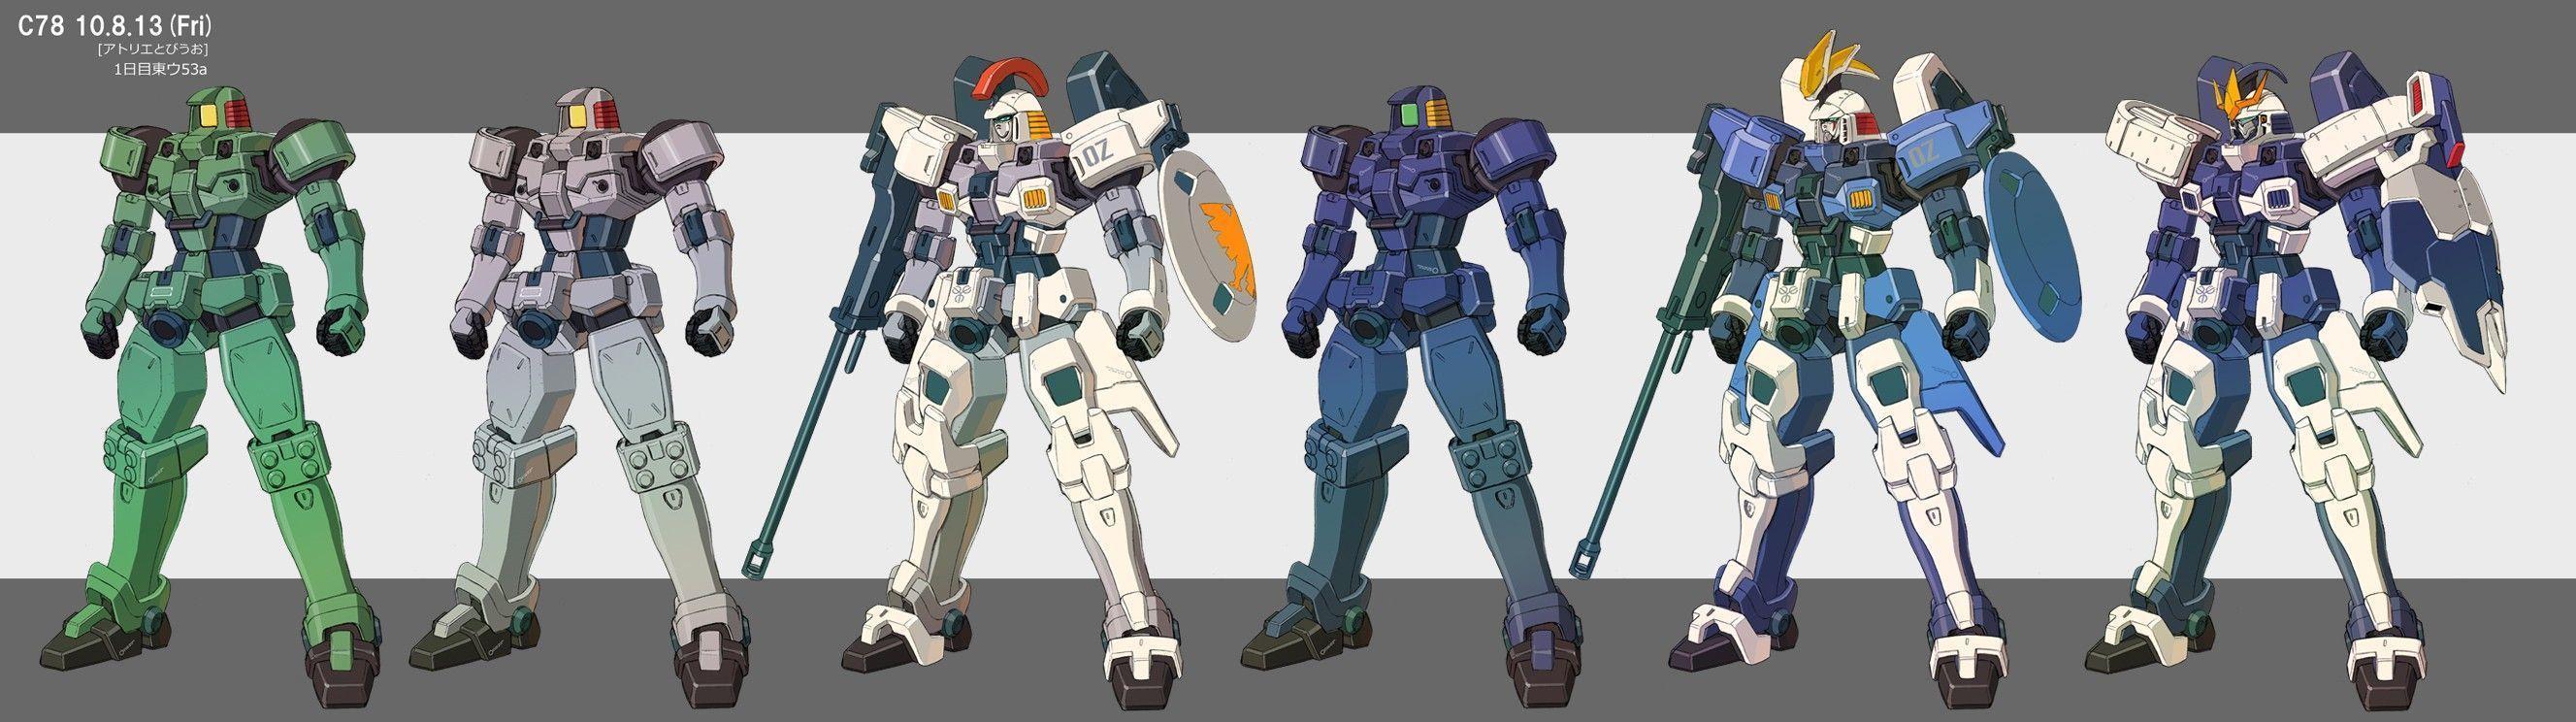 image For > Gundam Wing Wallpaper Widescreen